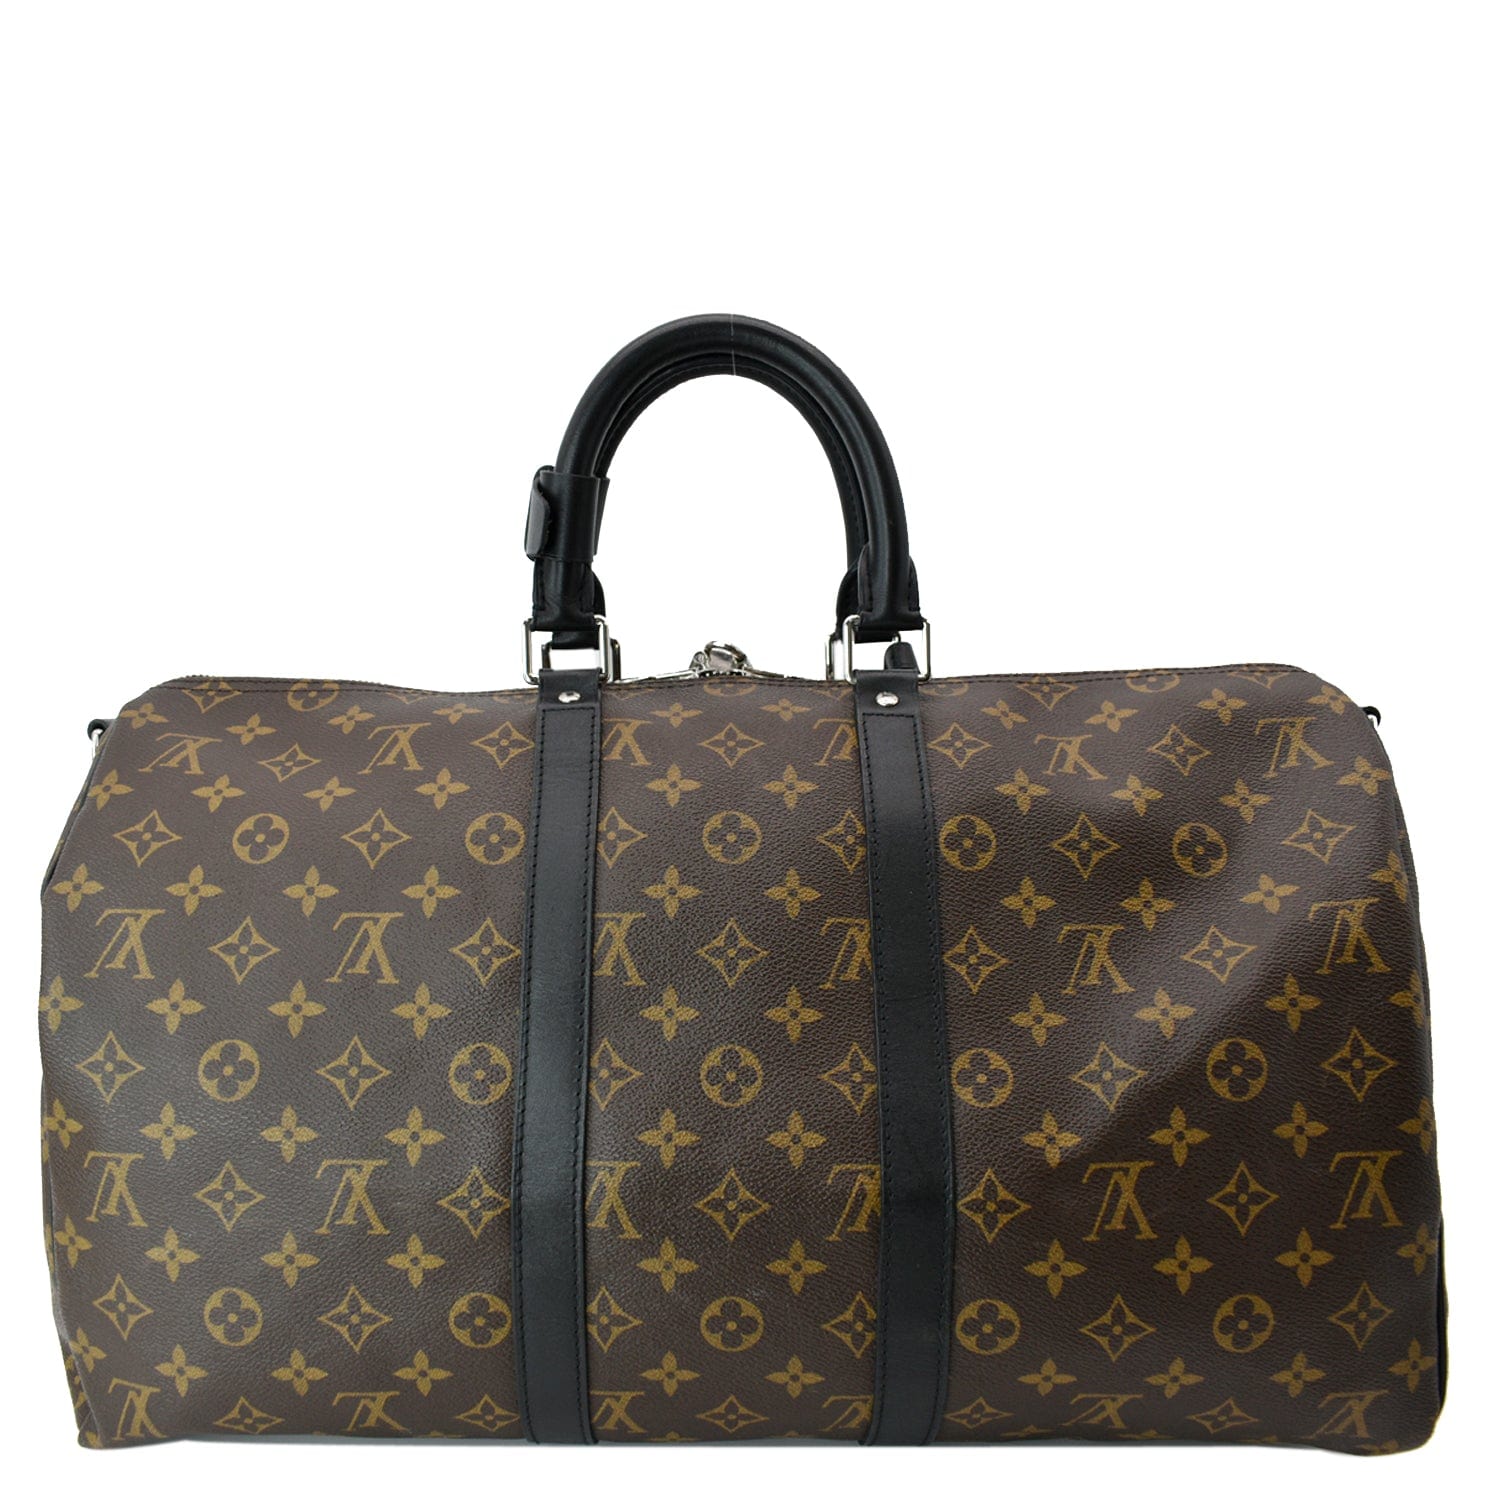 Louis Vuitton Keepall 45 Monogram torba podróżna